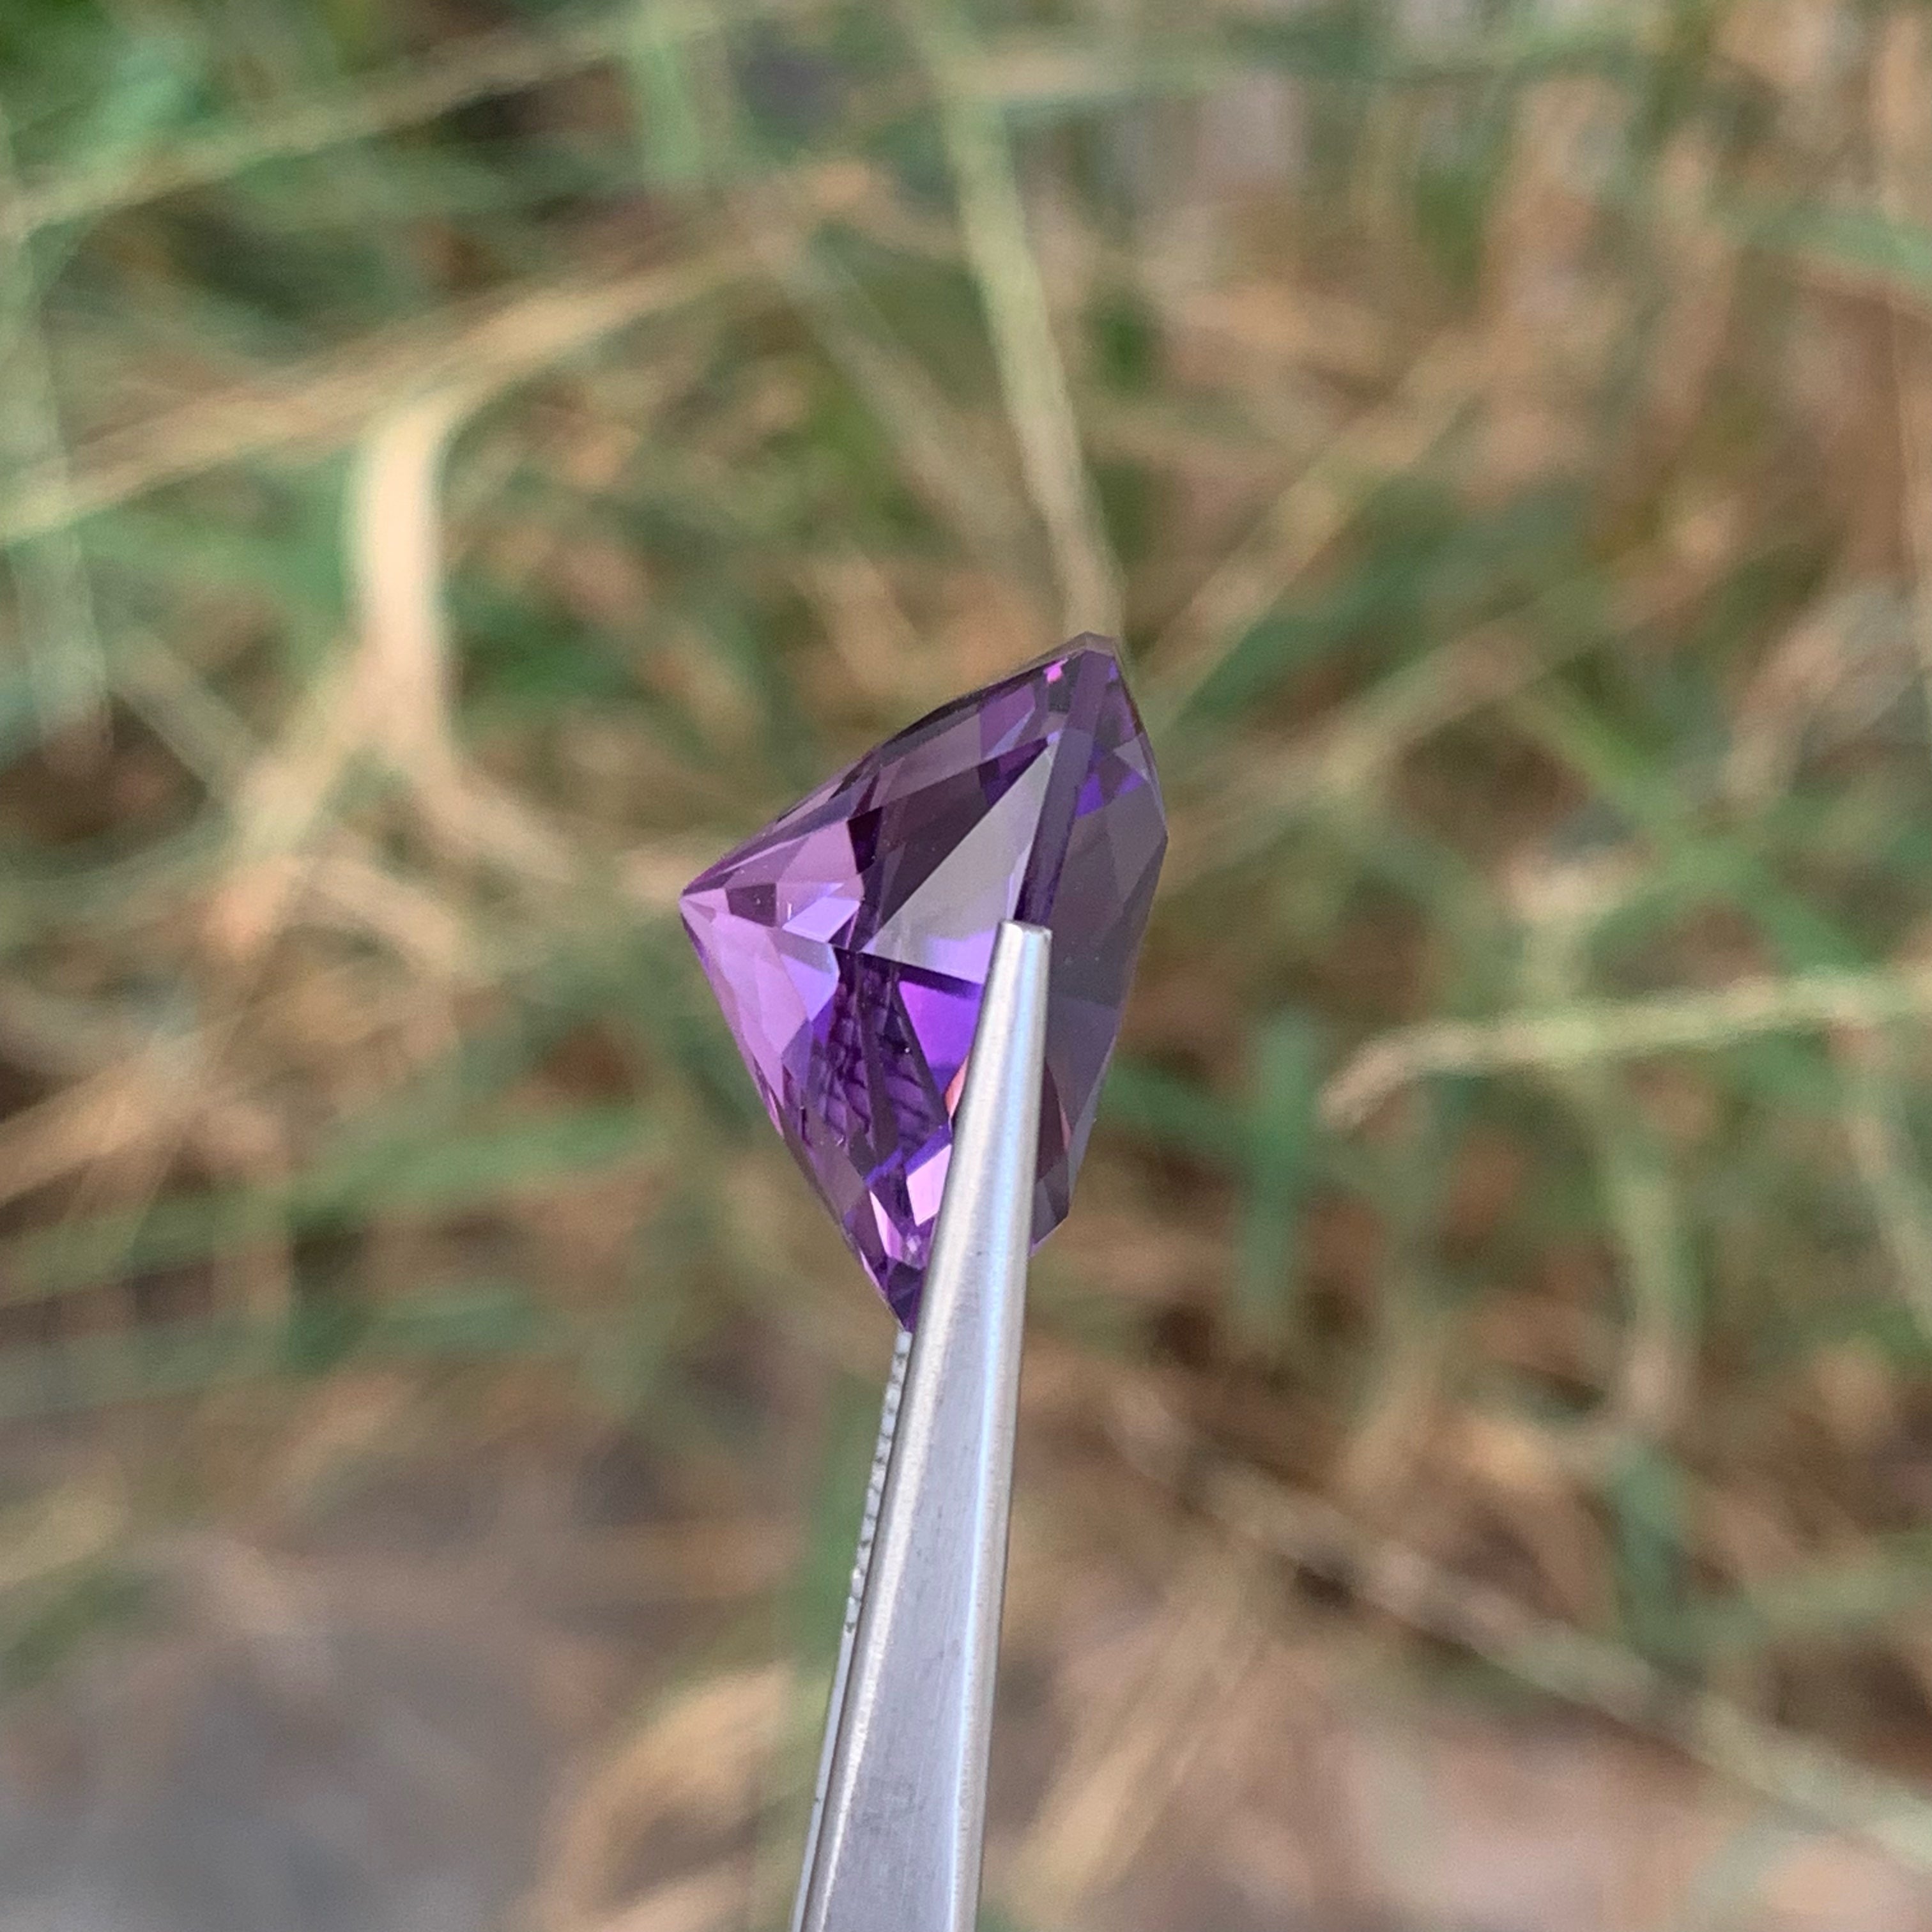 Luminescent Purple Amethyst 16.70 carats Custom Precision Cut Natural Brazilian Gem